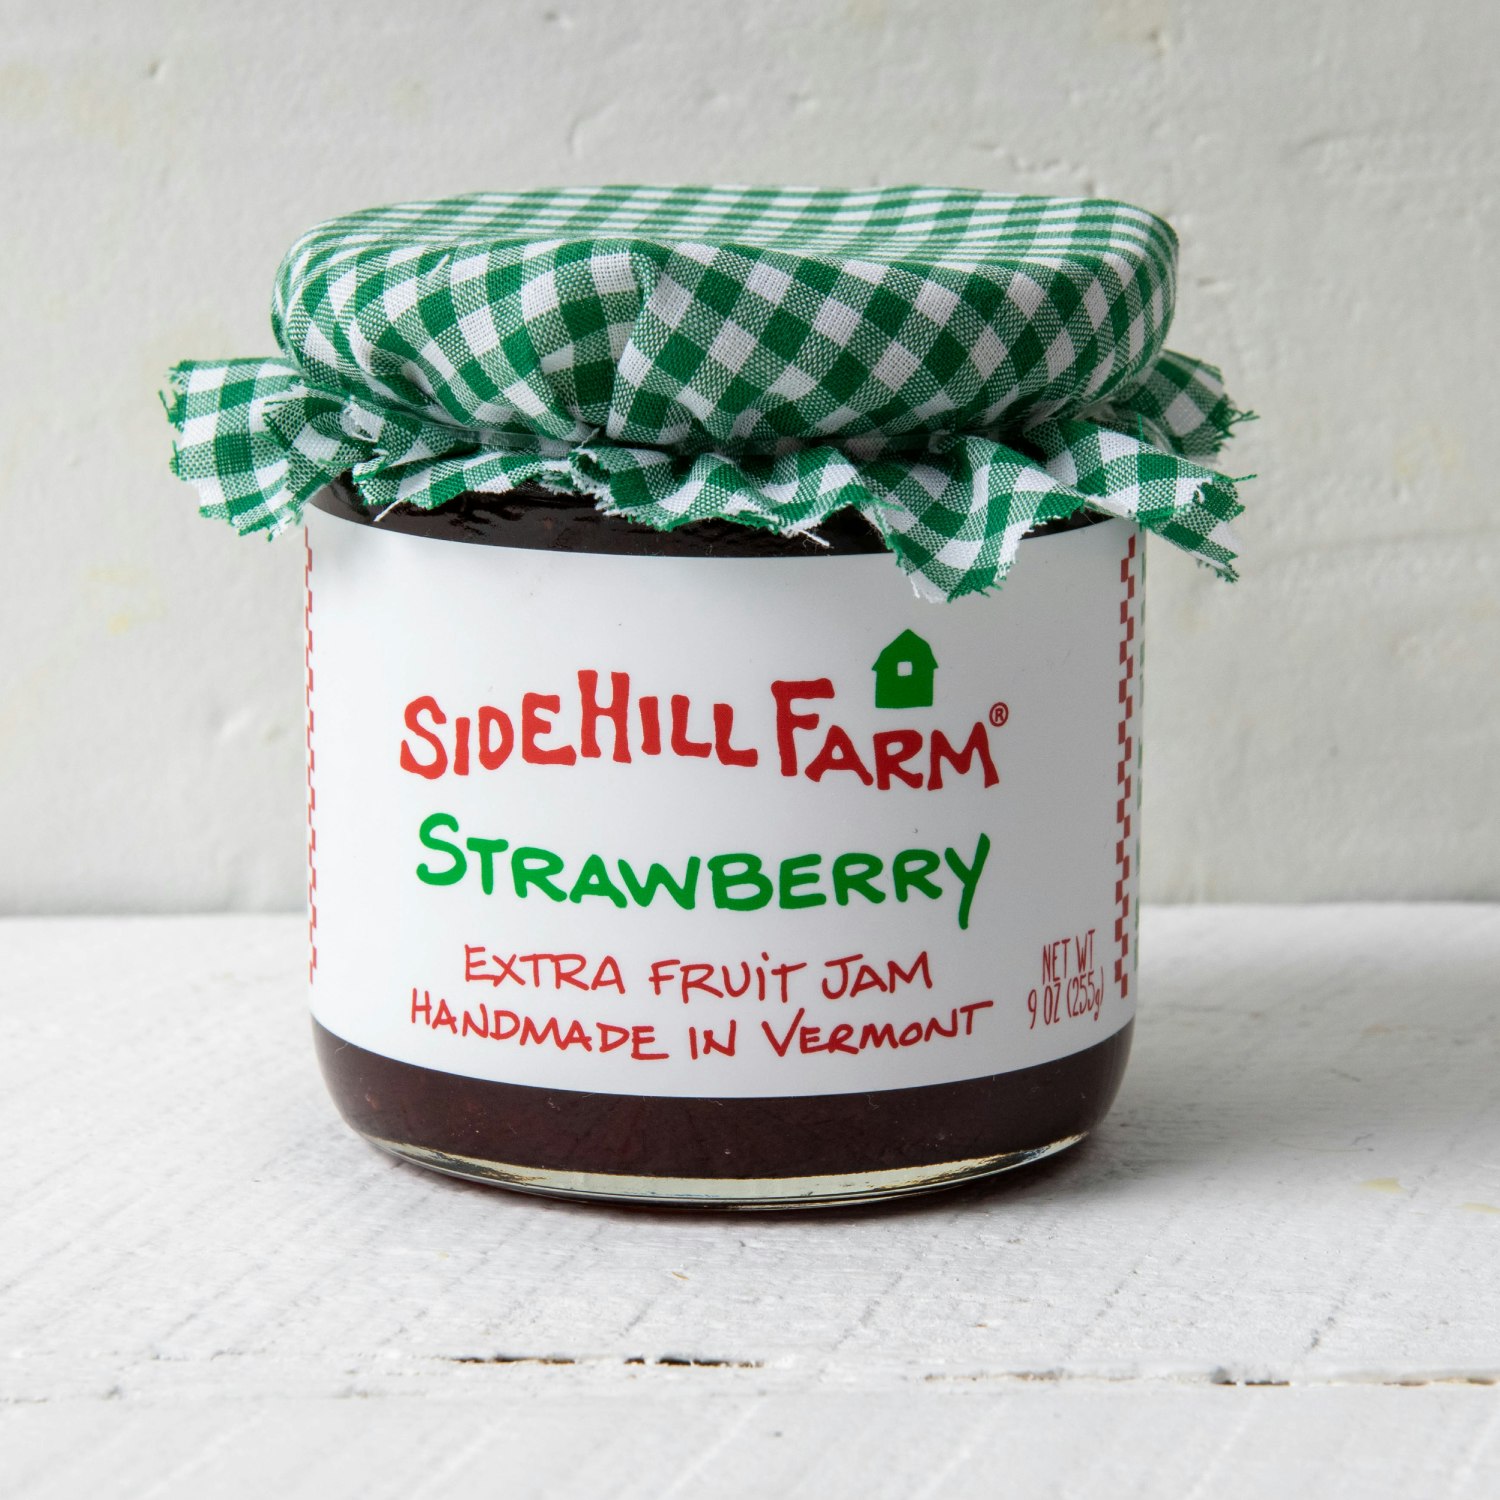 sidehill farm strawberry jam specialty foods